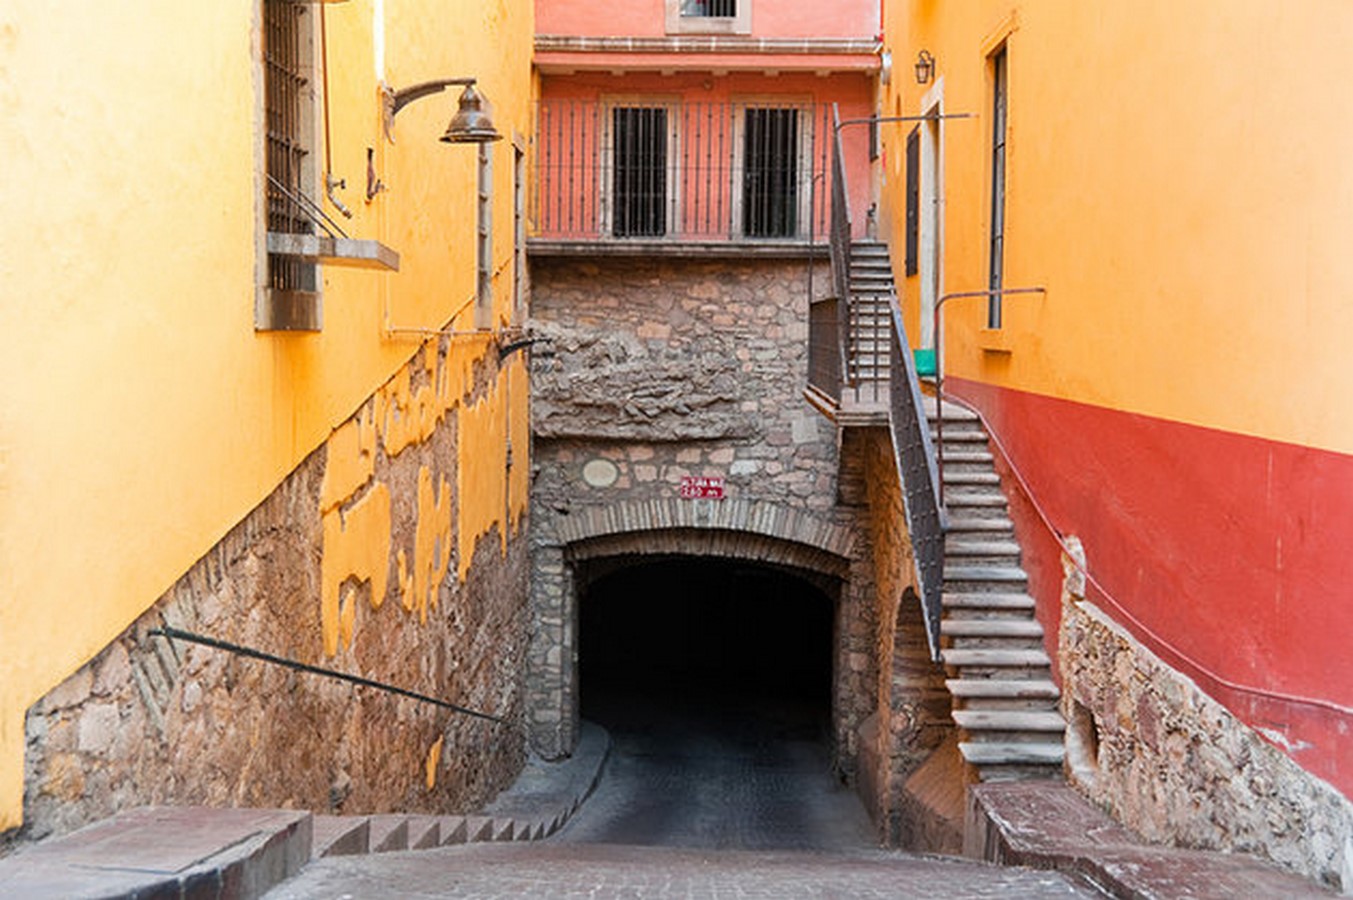 Exploring Guanajuato's Tunnels - Sheet1